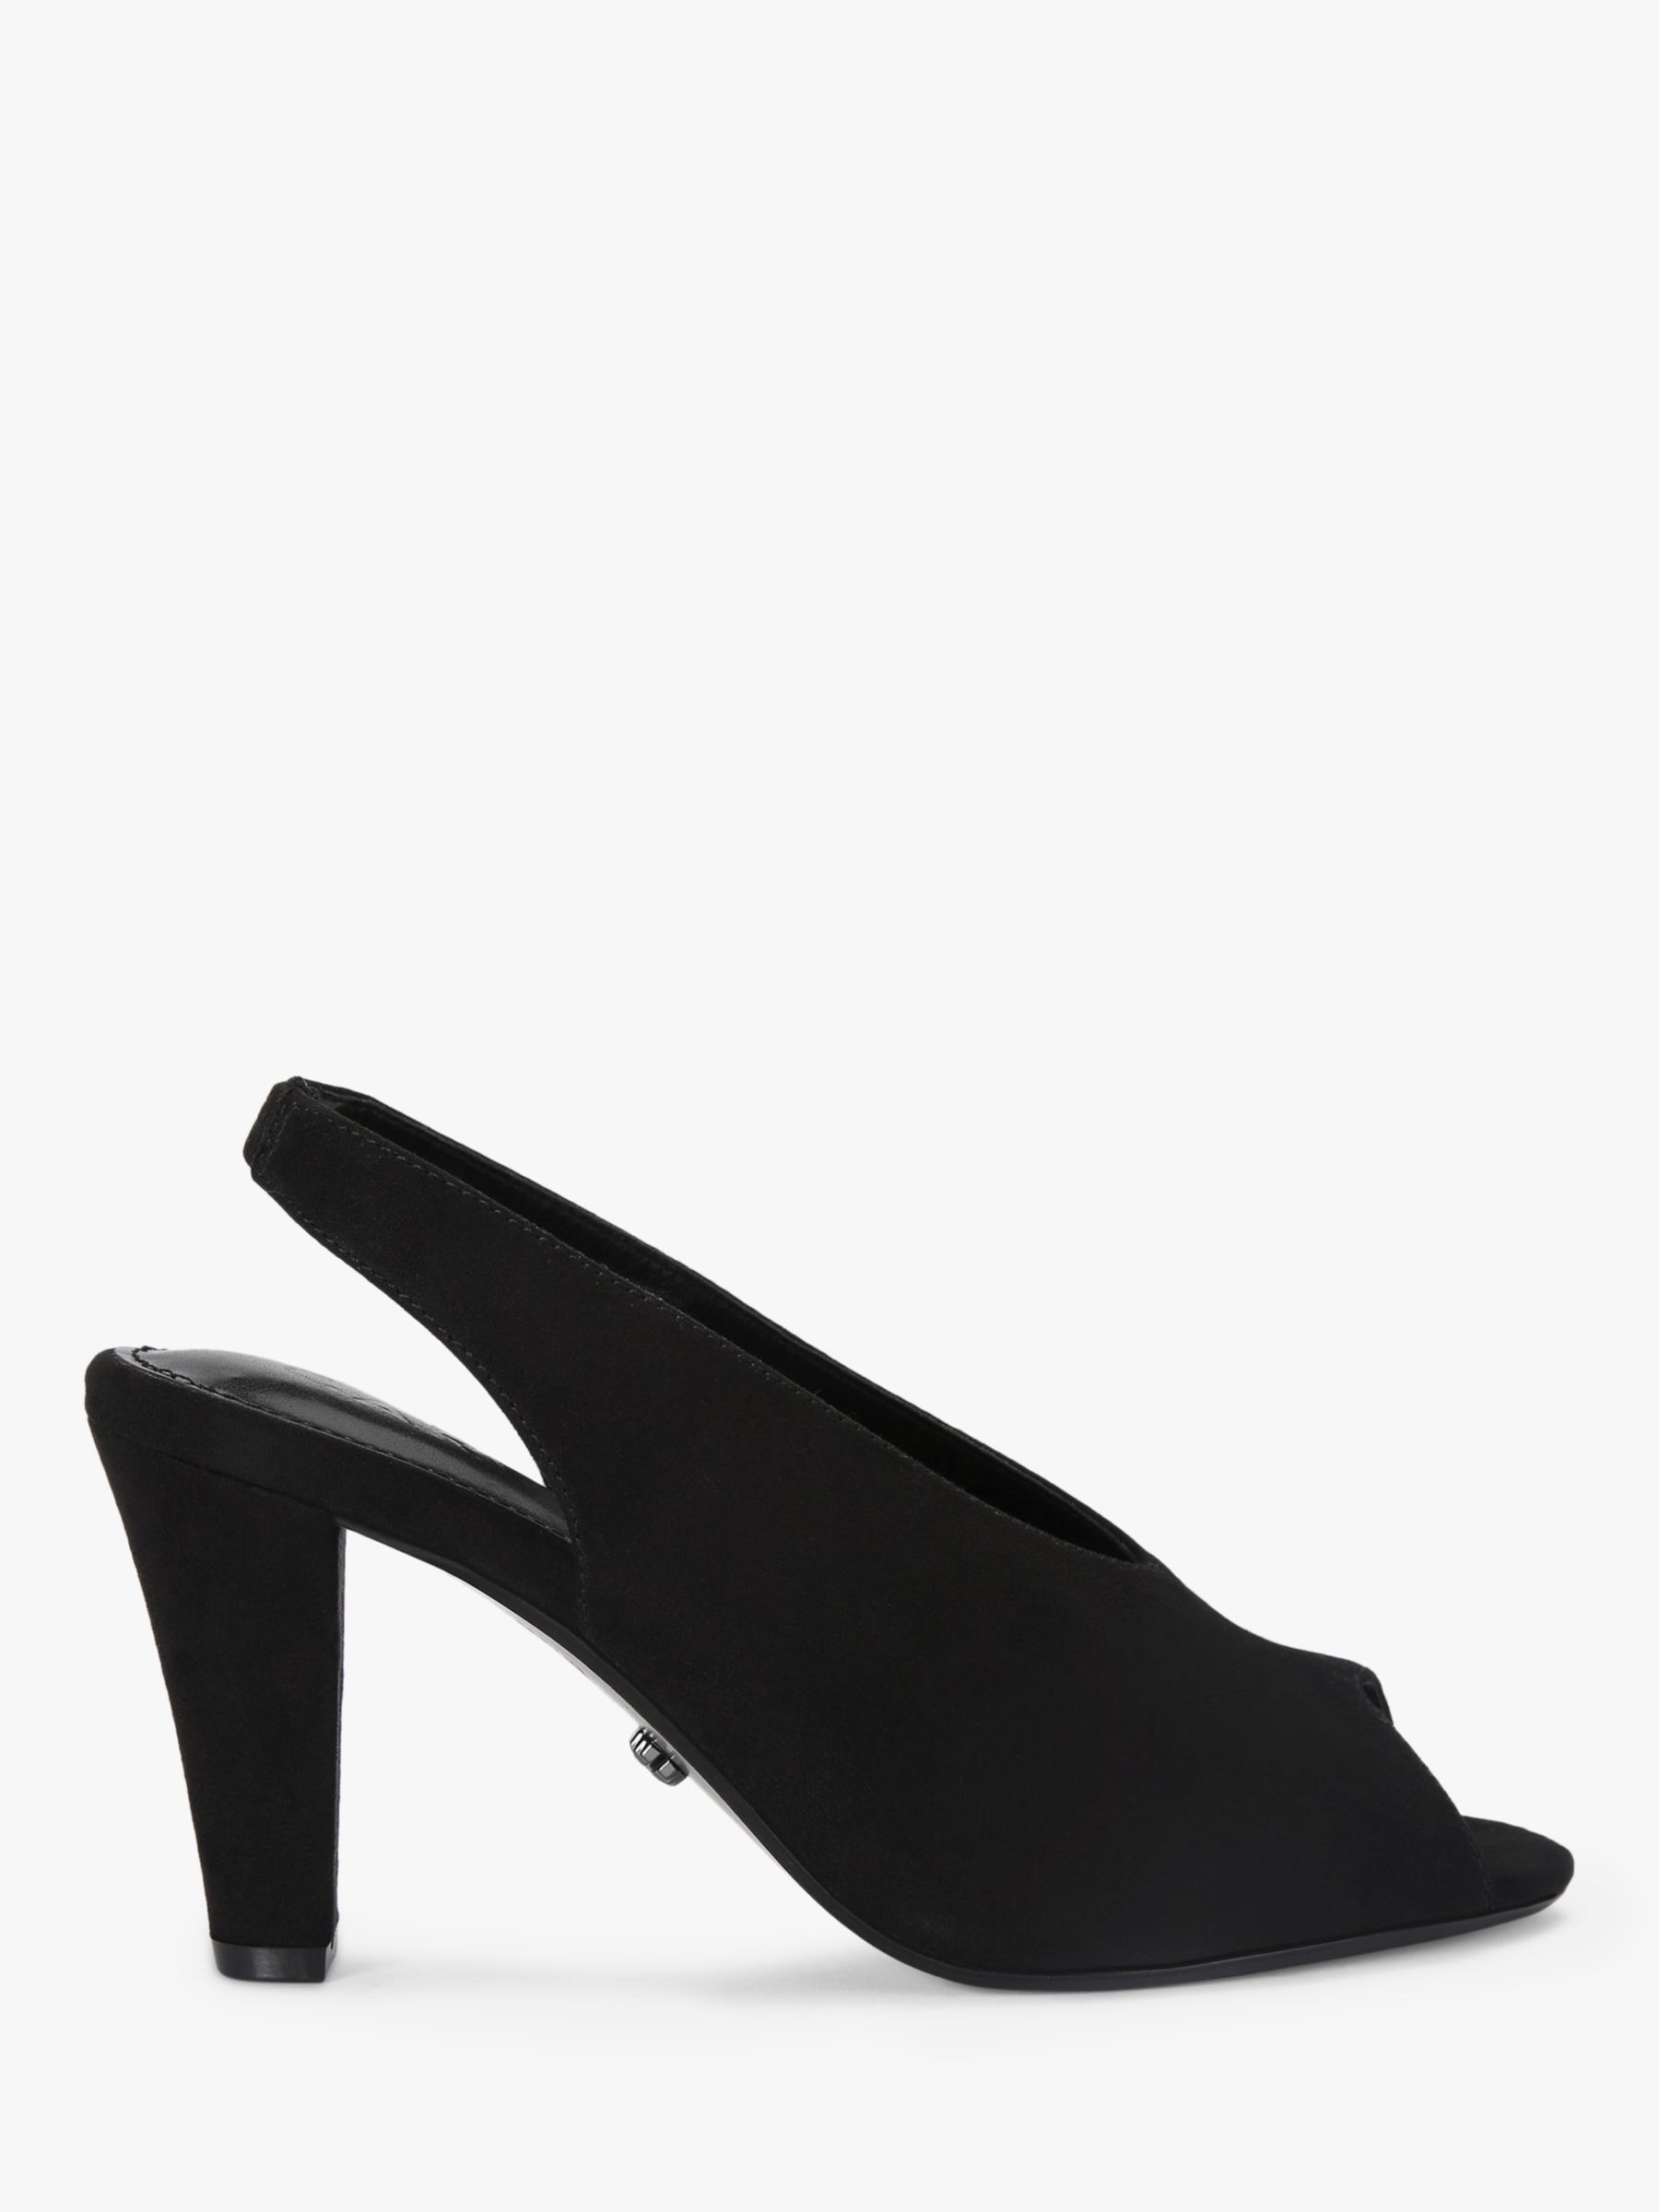 Carvela Bella Peep Toe Court Shoes, Black at John Lewis & Partners